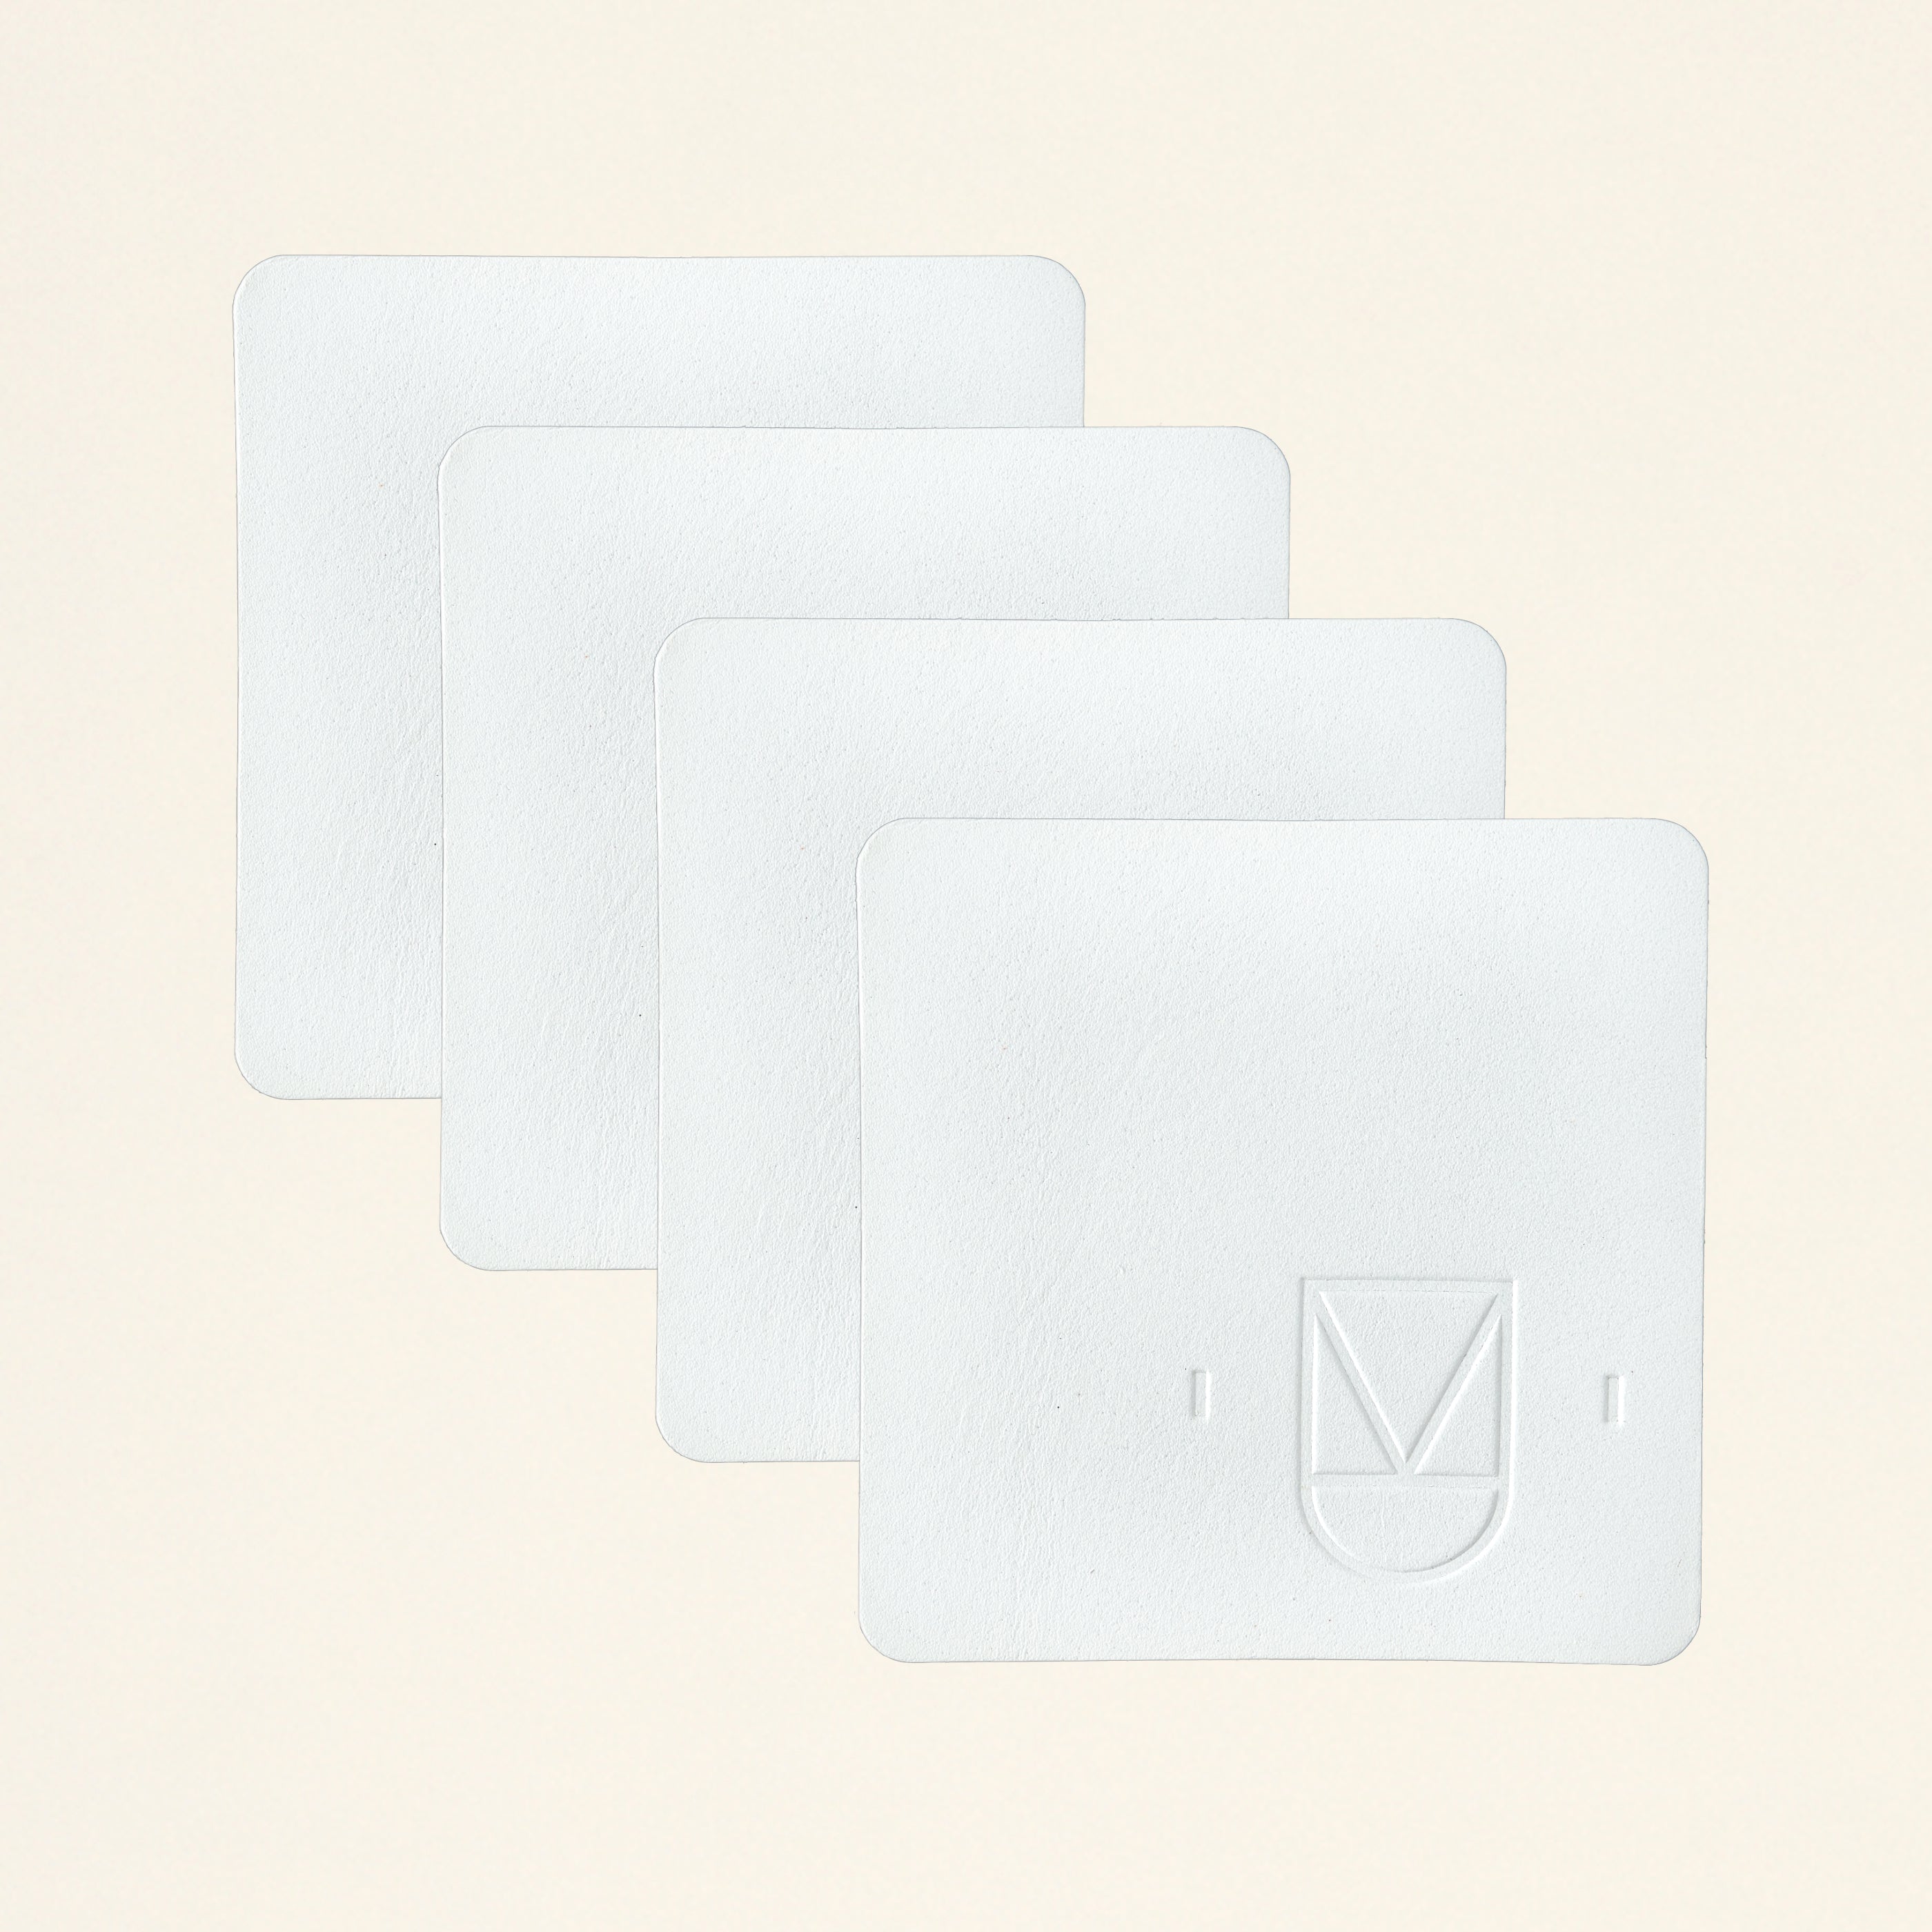 KMI White Leather Coasters Set